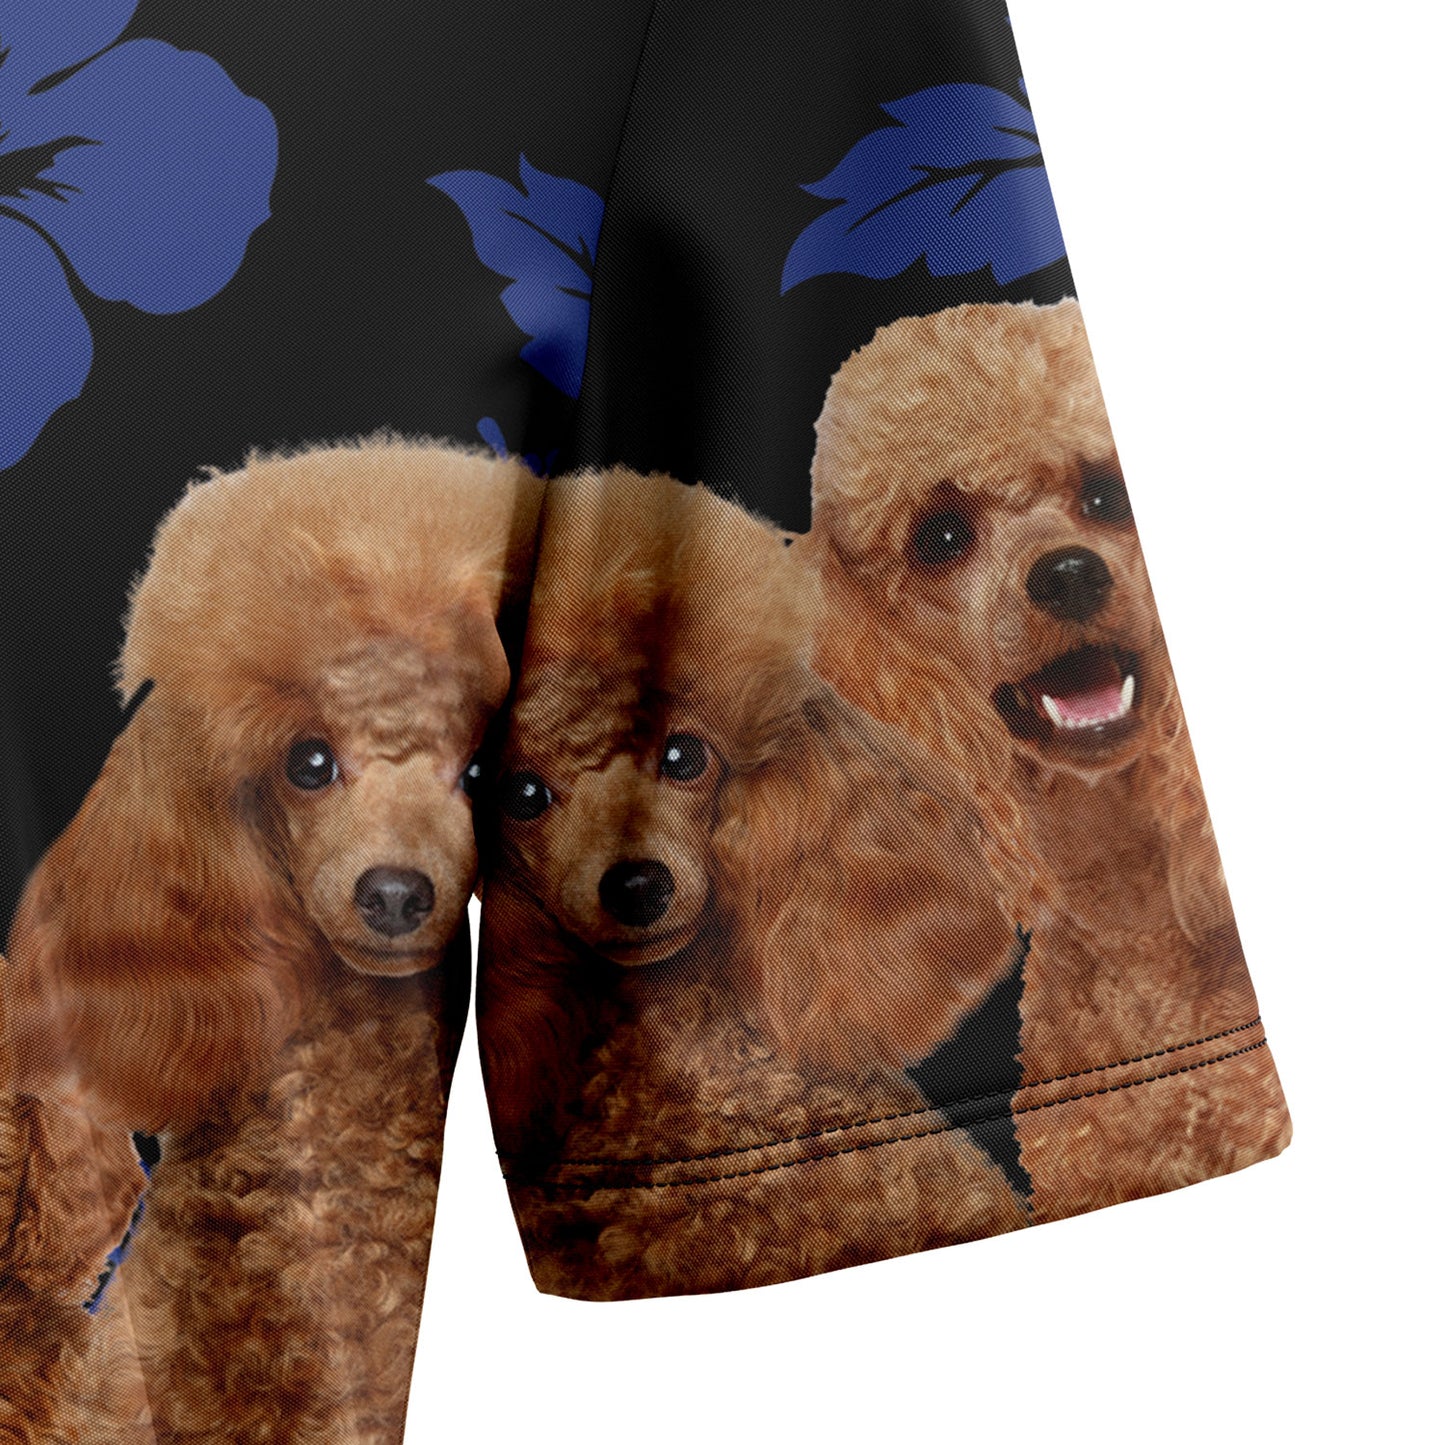 Awesome Poodle TG5721 Hawaiian Shirt